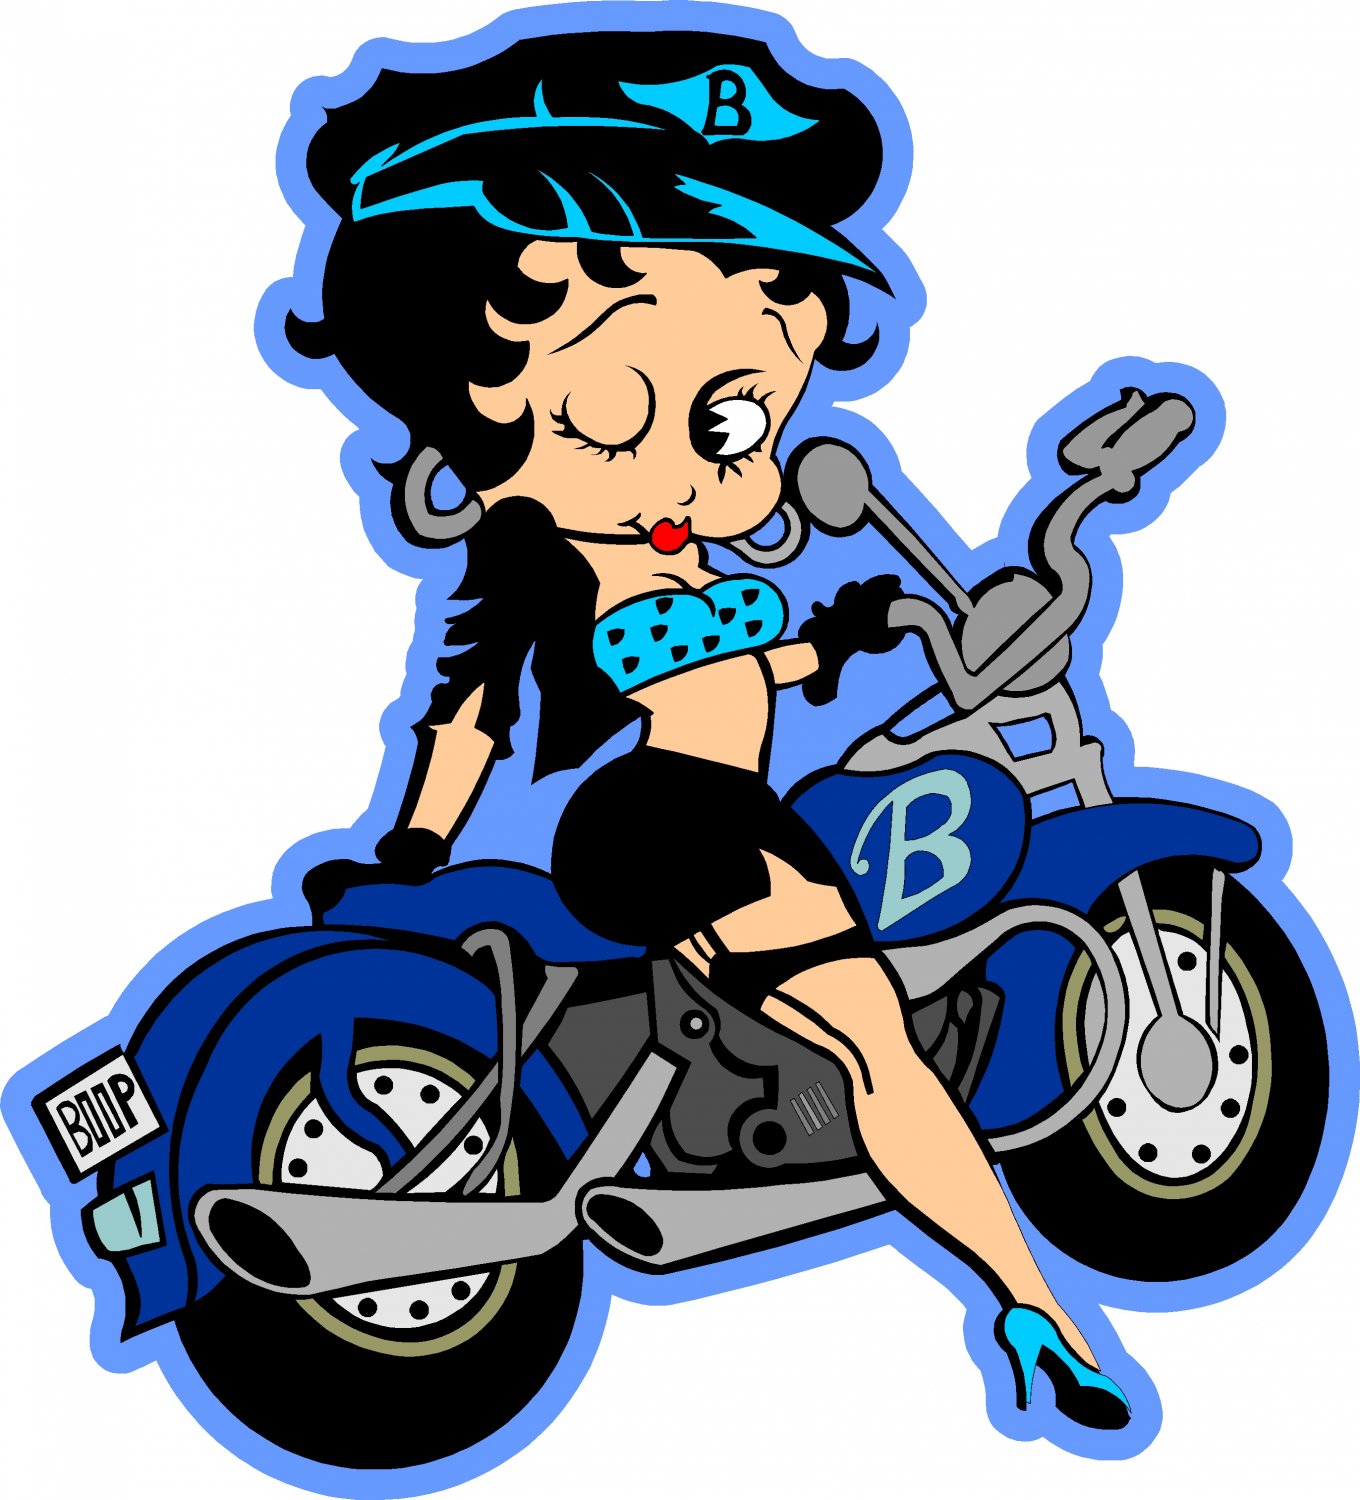 betty boop motorcycle costume xxl